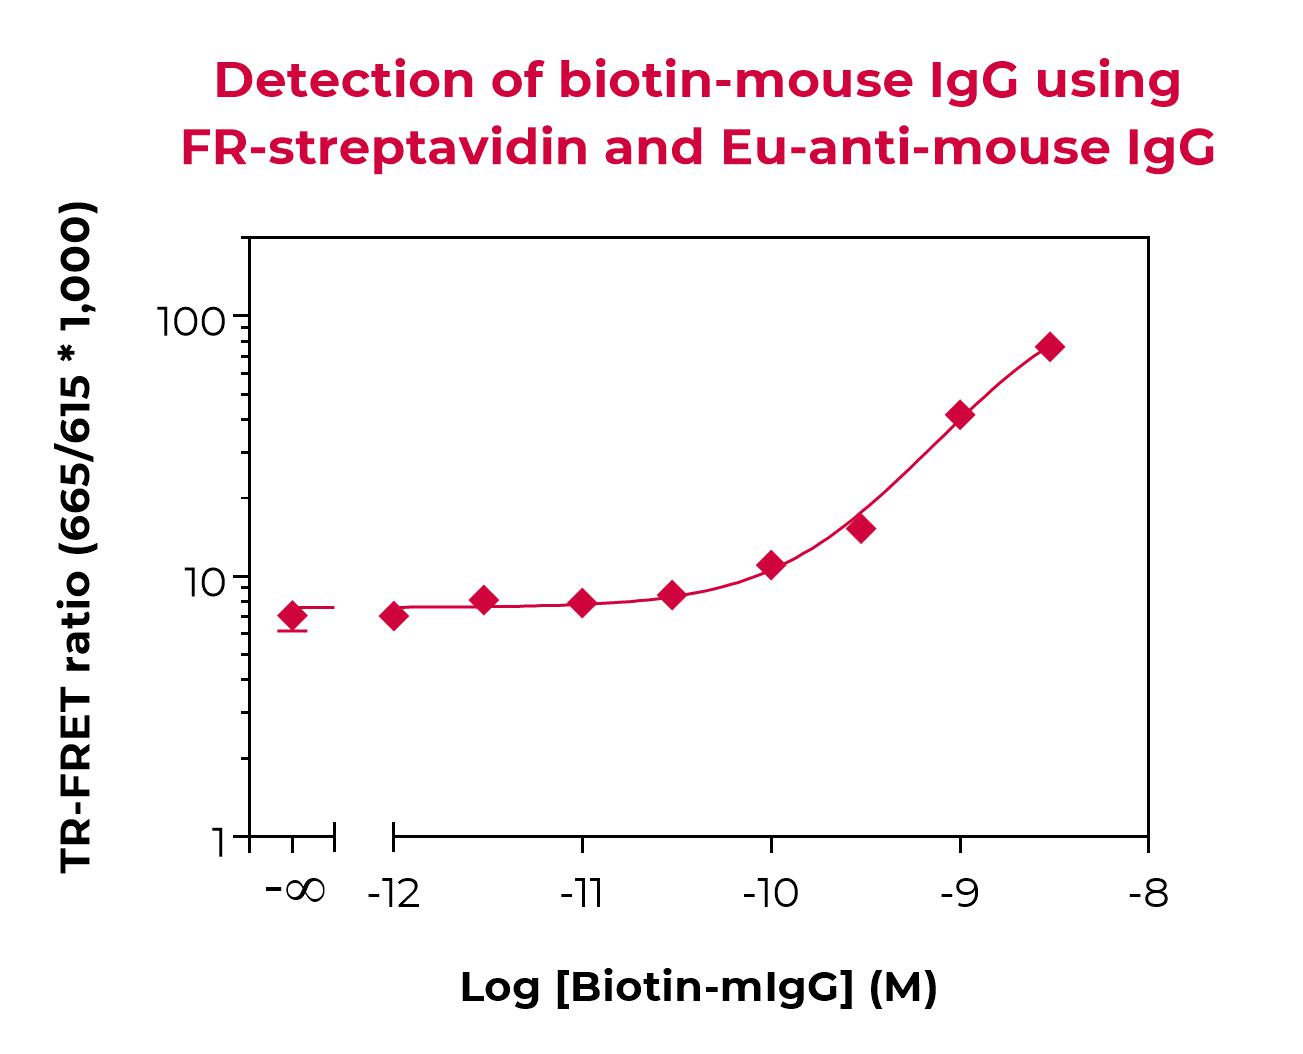 Eu-anti-mouse IgG validation